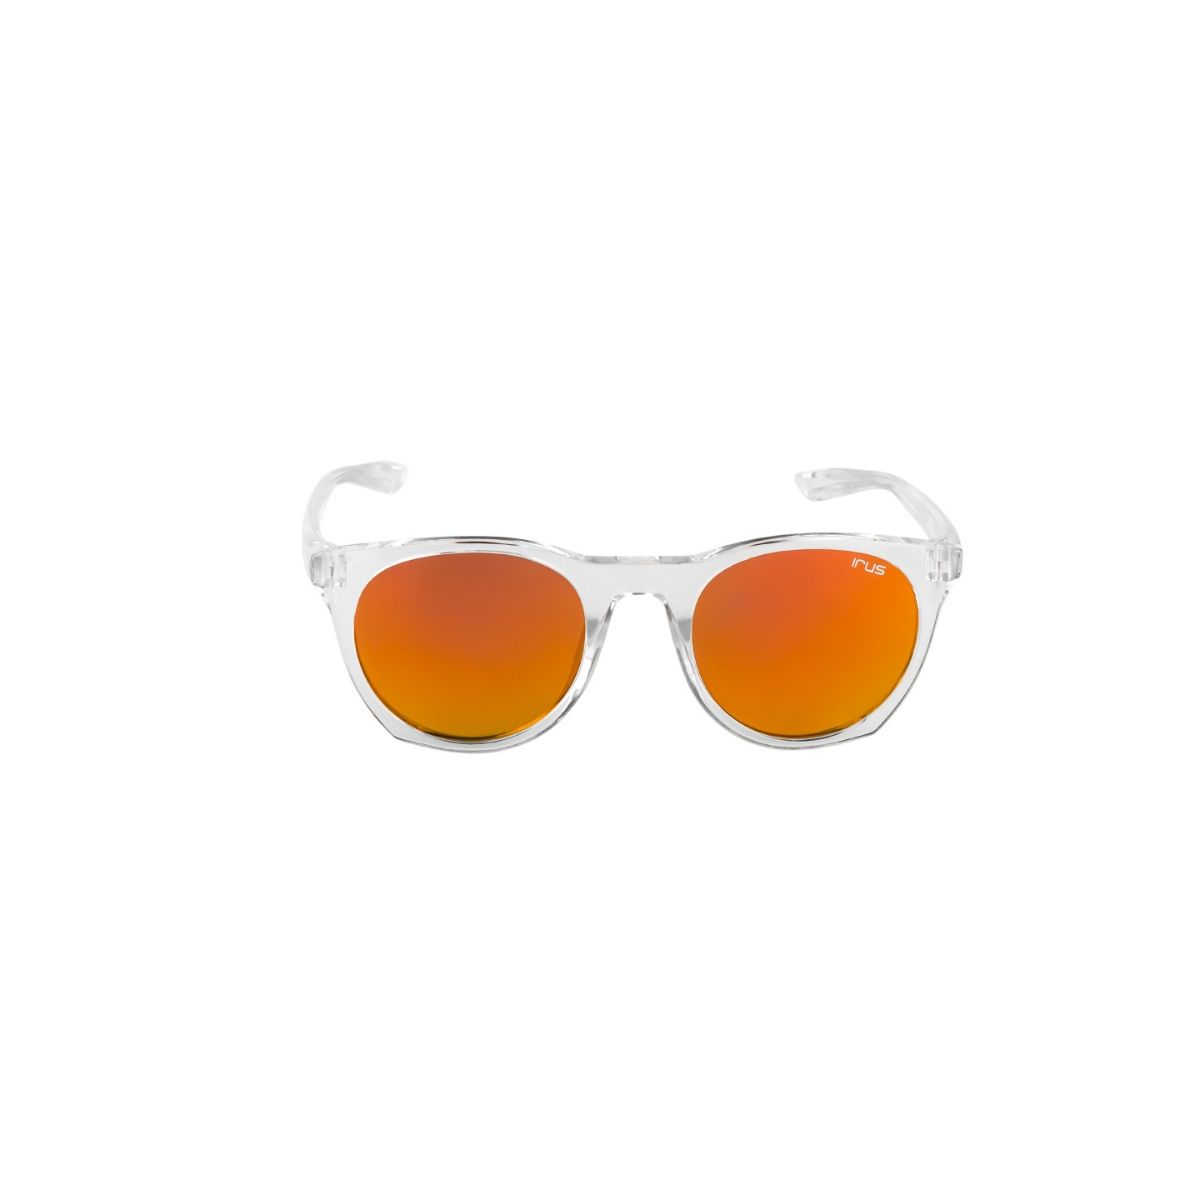 IRUS Idee Silver 100% Uv Protected Oval Full Rim Unisex Sunglass (Orange Mirrored Lens)